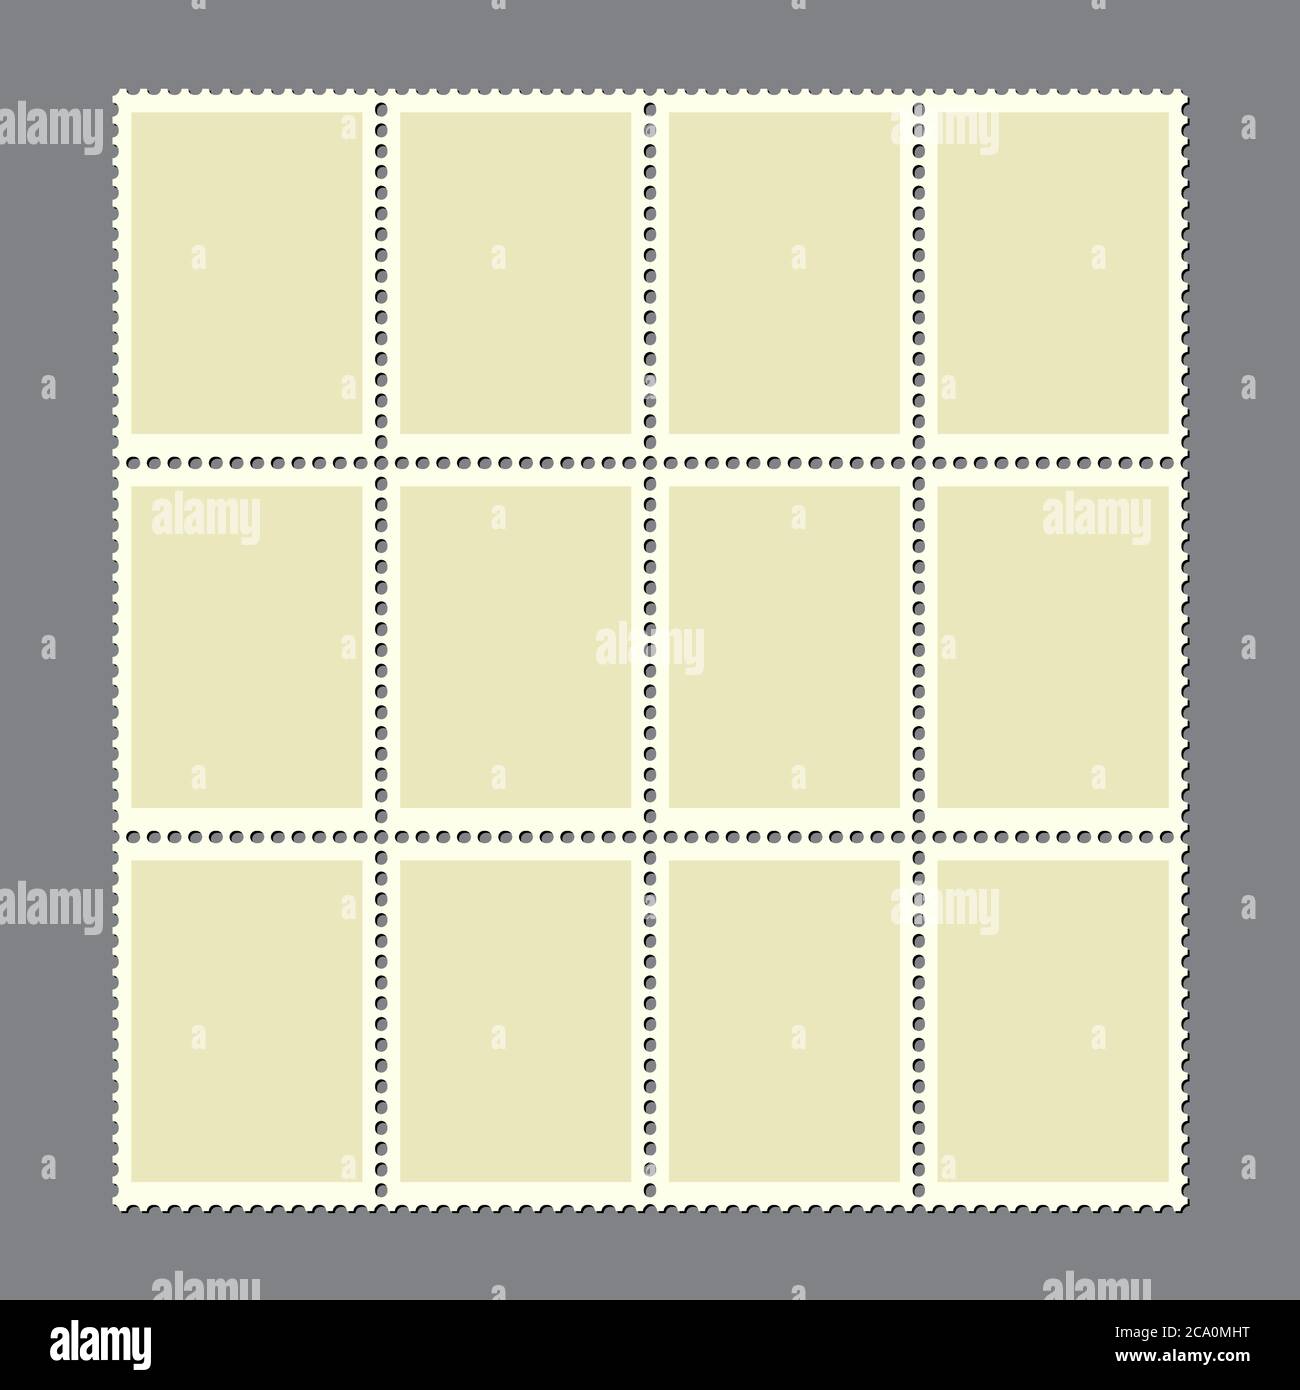 Postage marks set. Sheet of 12 blank postal stamps for postcard or envelopes. Vintage empty stamp with perforated edge for letter. Retro border or fra Stock Vector